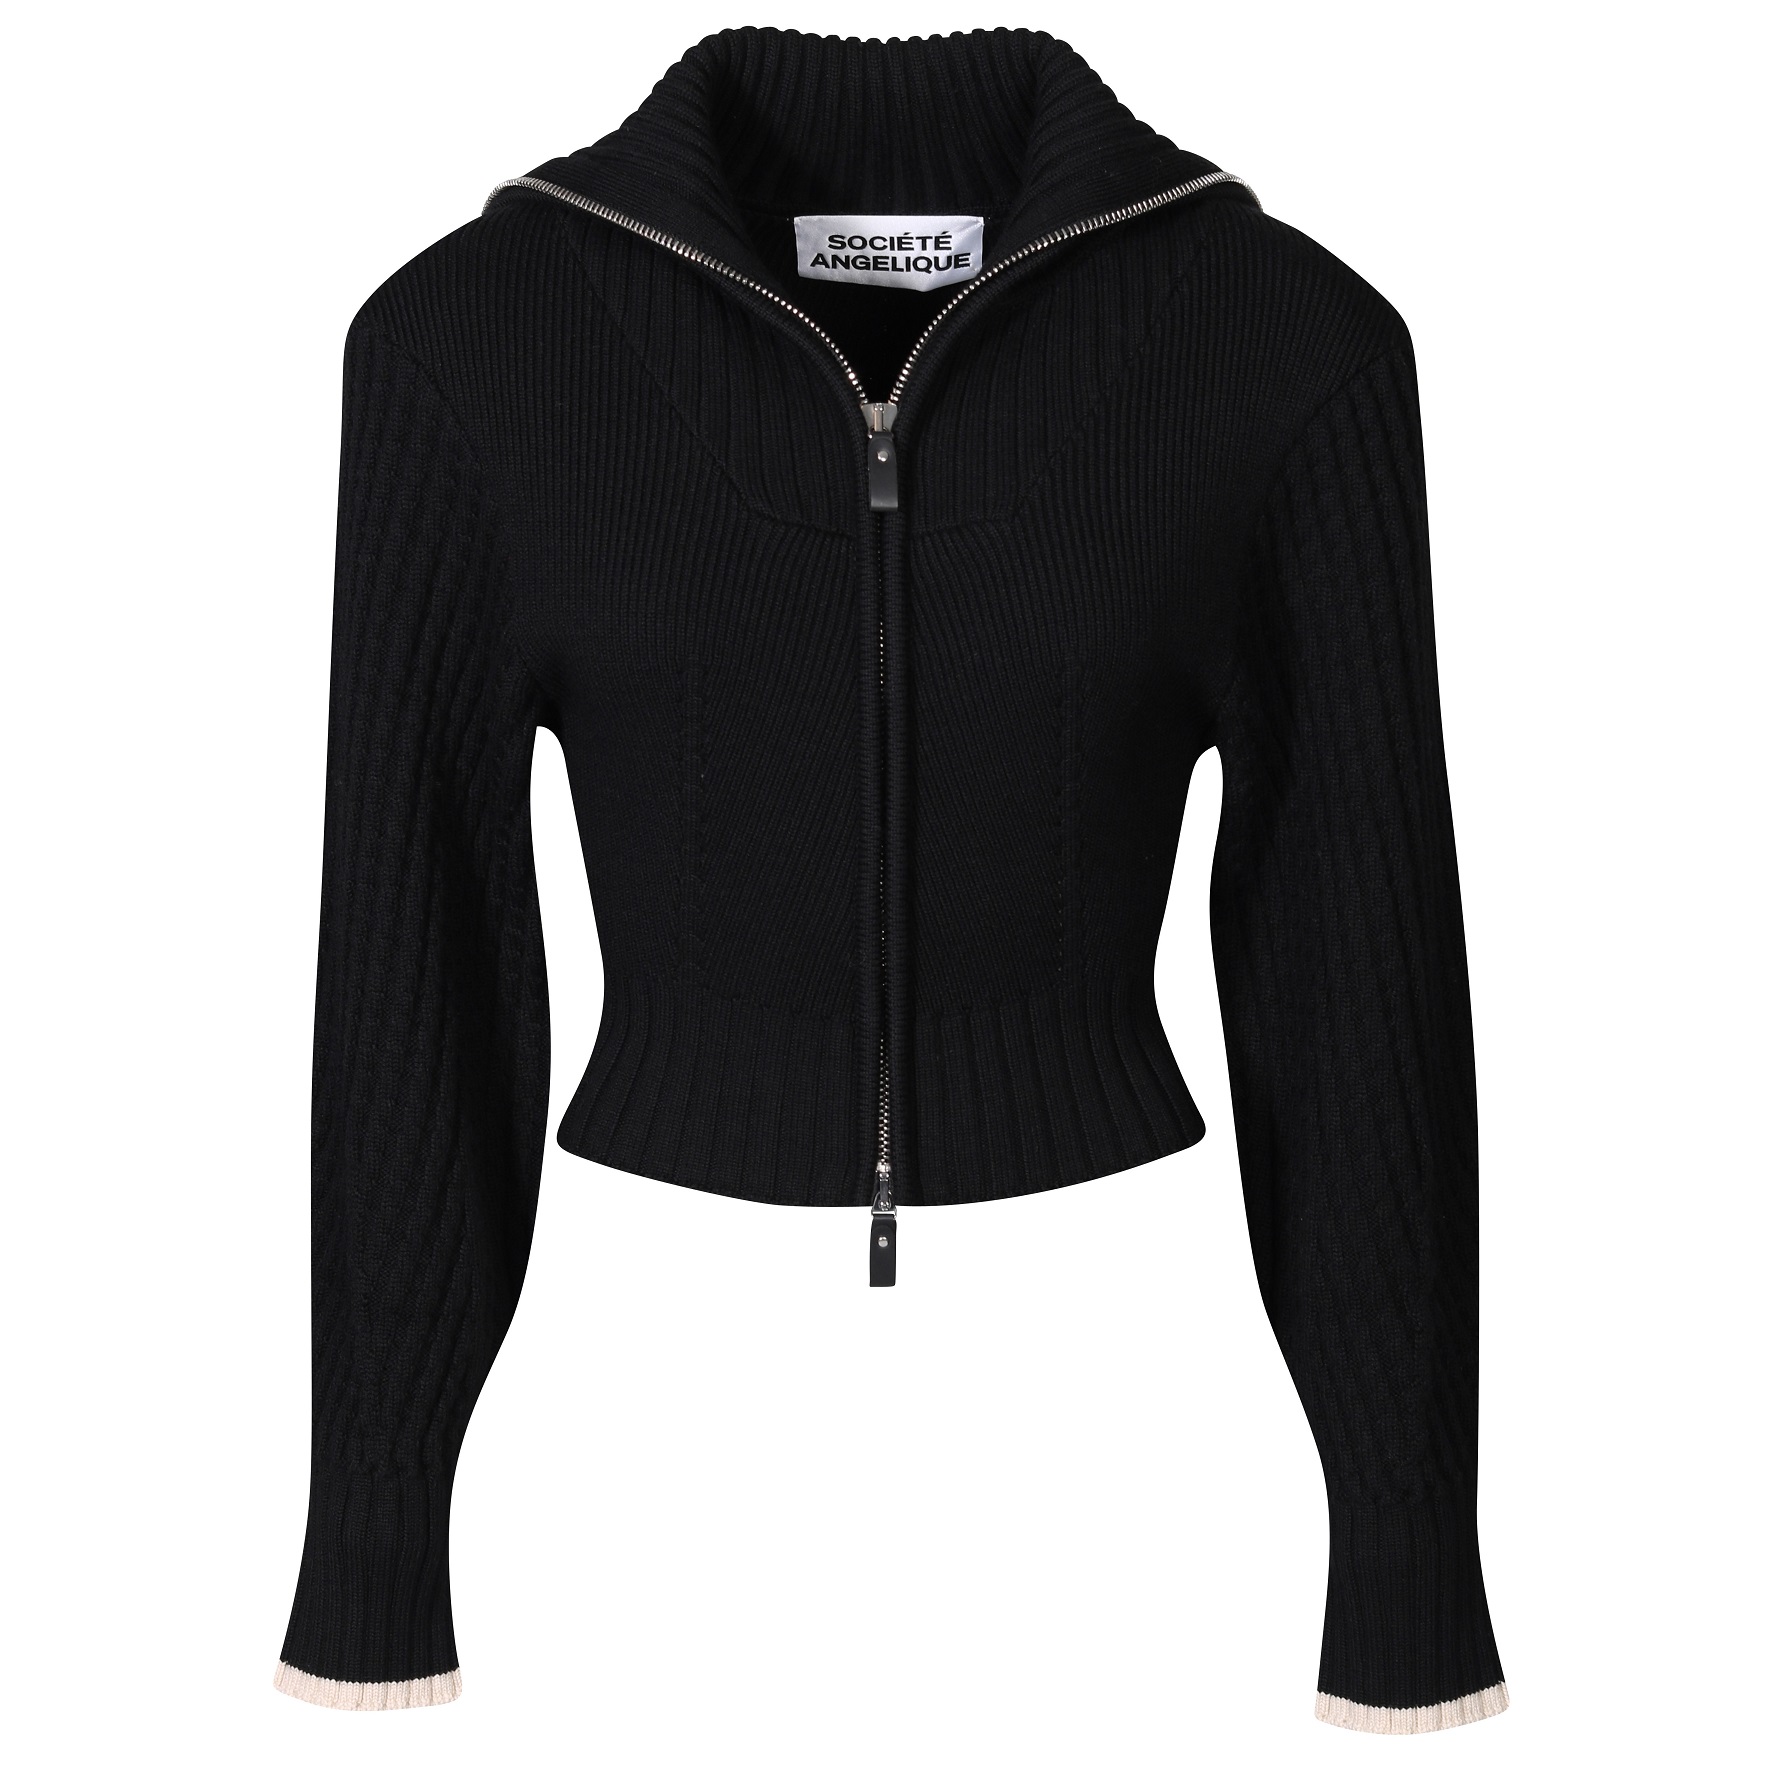 SOCIÉTÉ ANGELIQUE Merino Knit Zip Jacket with Big Shoulder 38